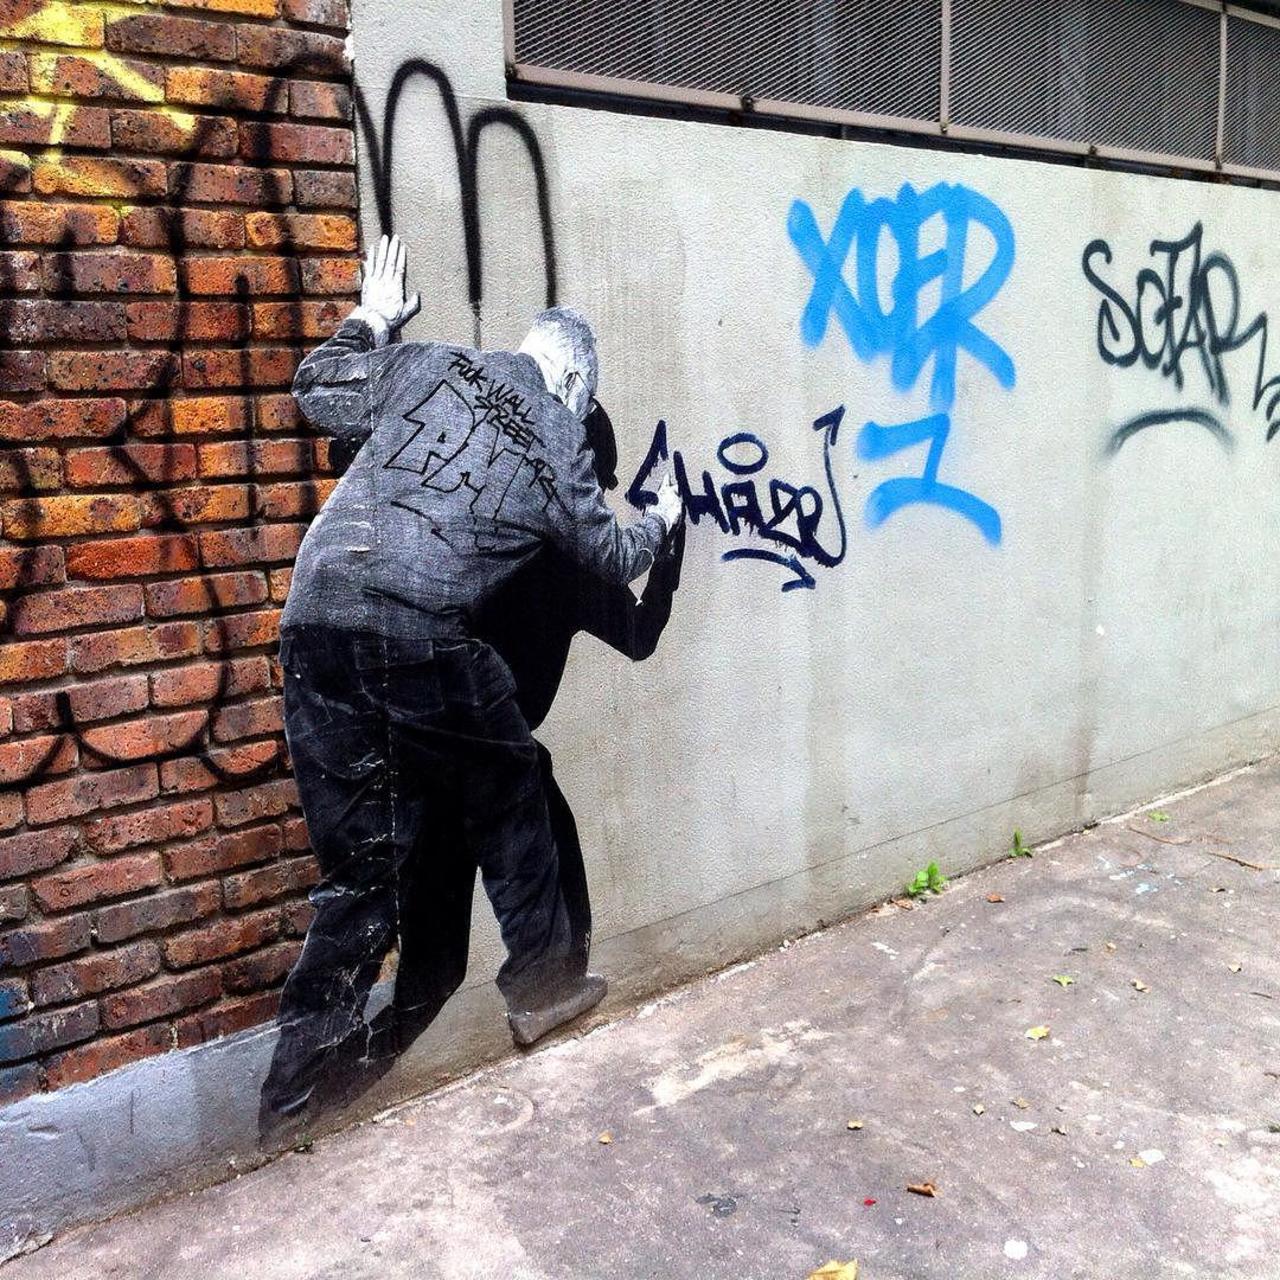 #Paris #graffiti photo by @noamzucker http://ift.tt/1MgpwG8 #StreetArt http://t.co/OeuaEJQU5R